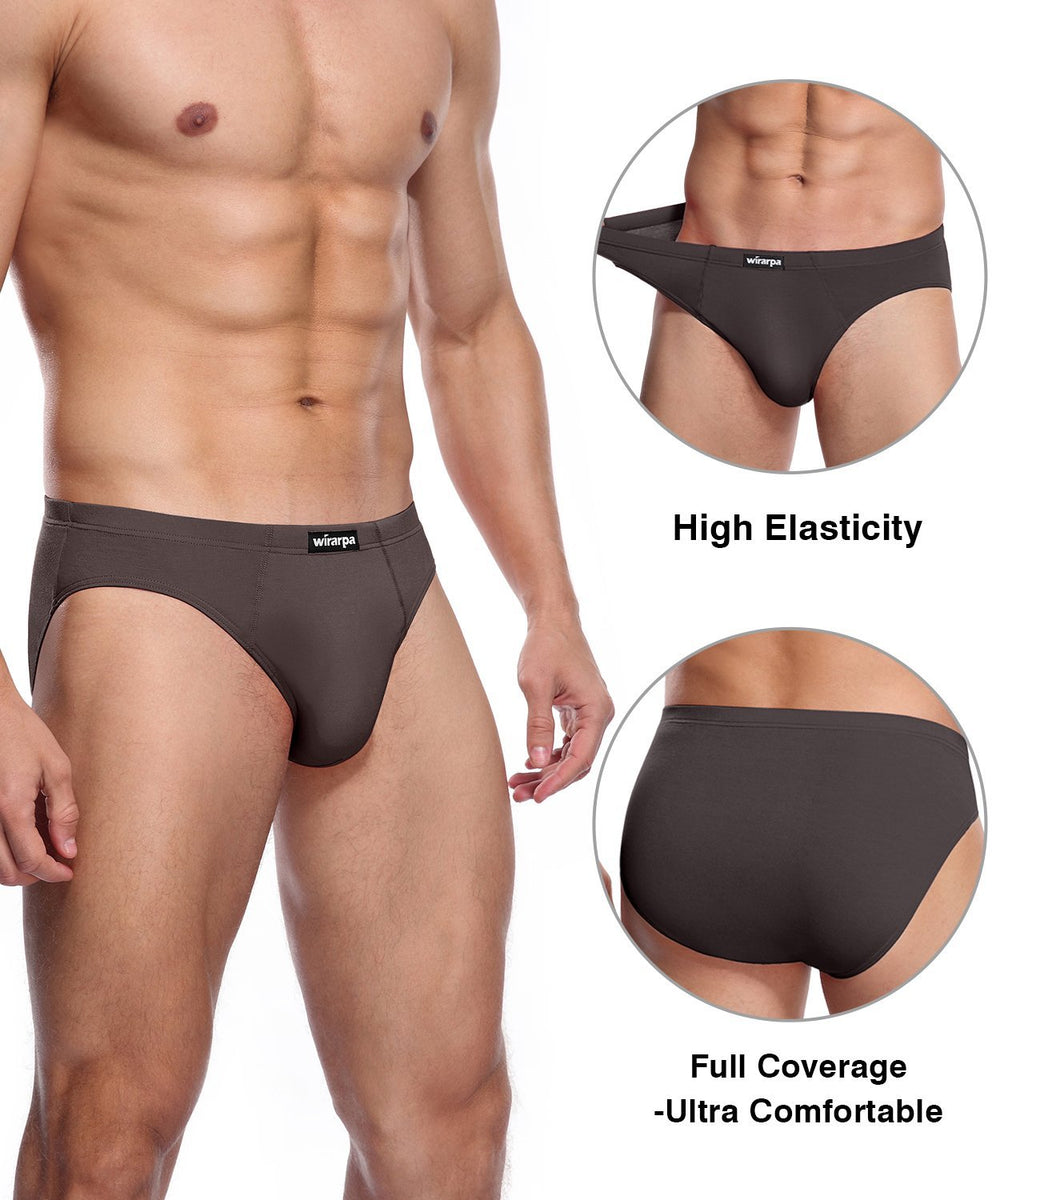 wirarpa Men's Underwear Multipack Modal Microfiber Briefs No Fly